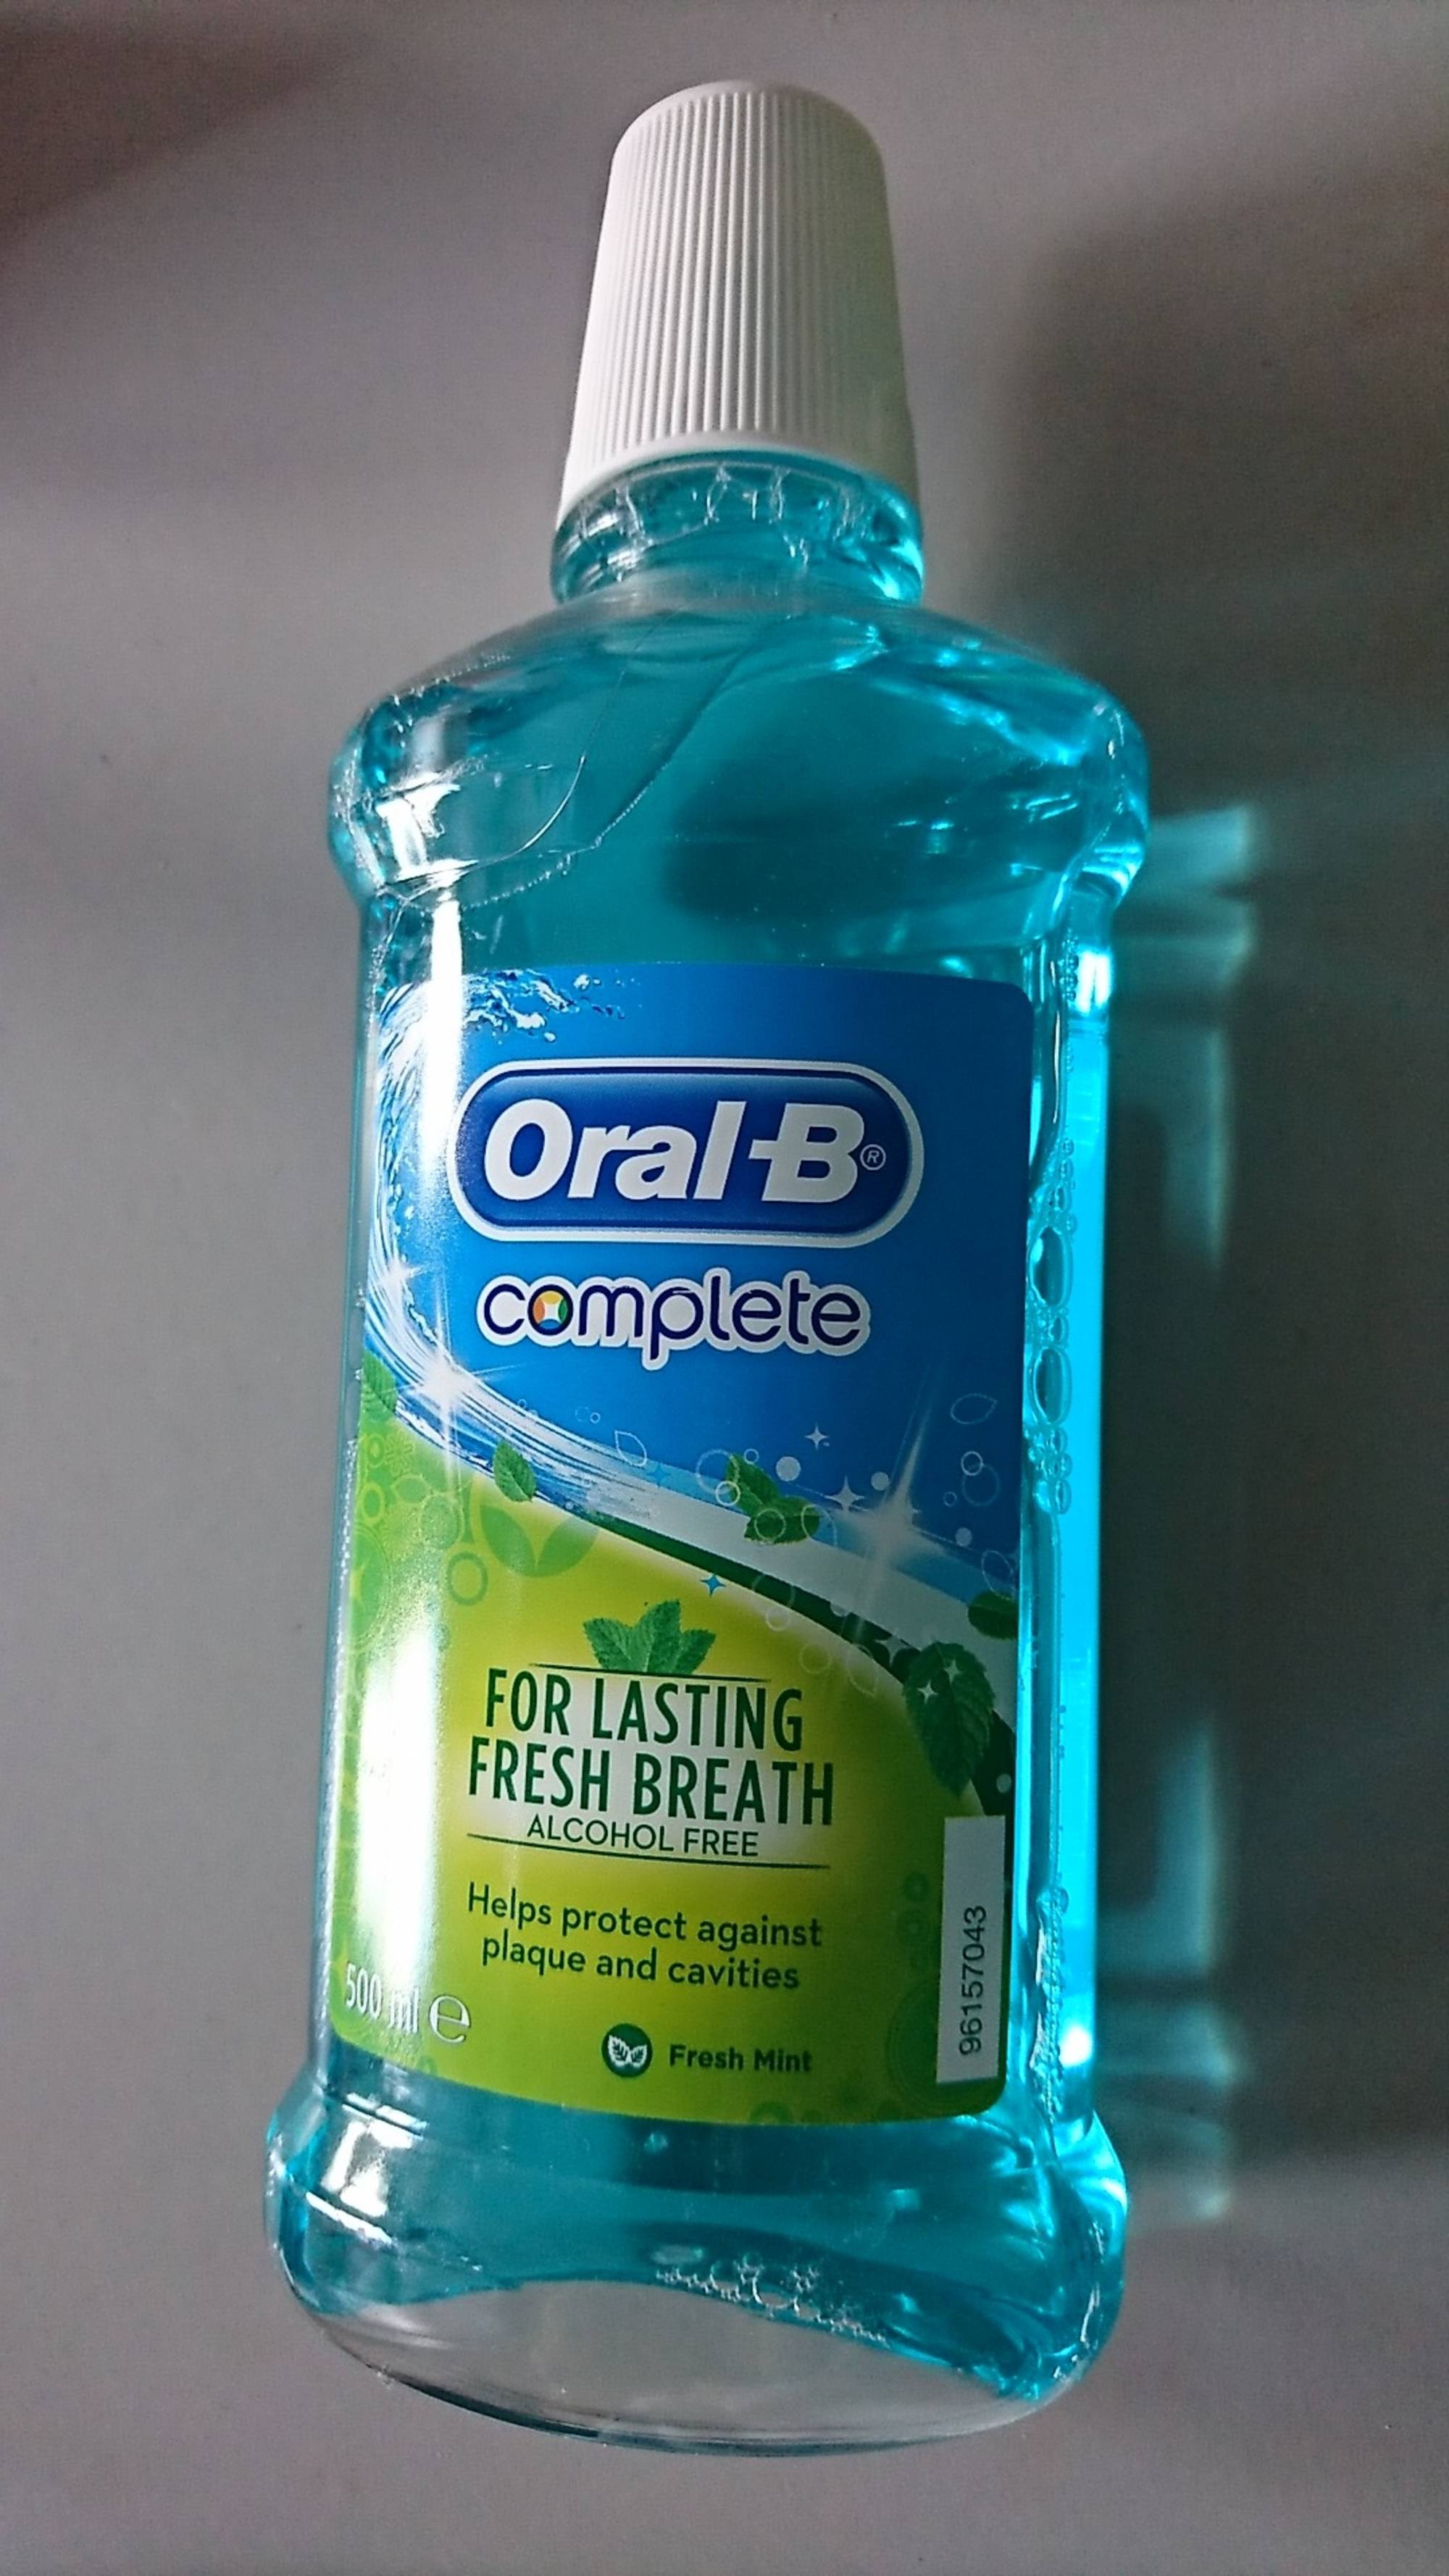 ORAL-B - Complete - For lasting fresh breath